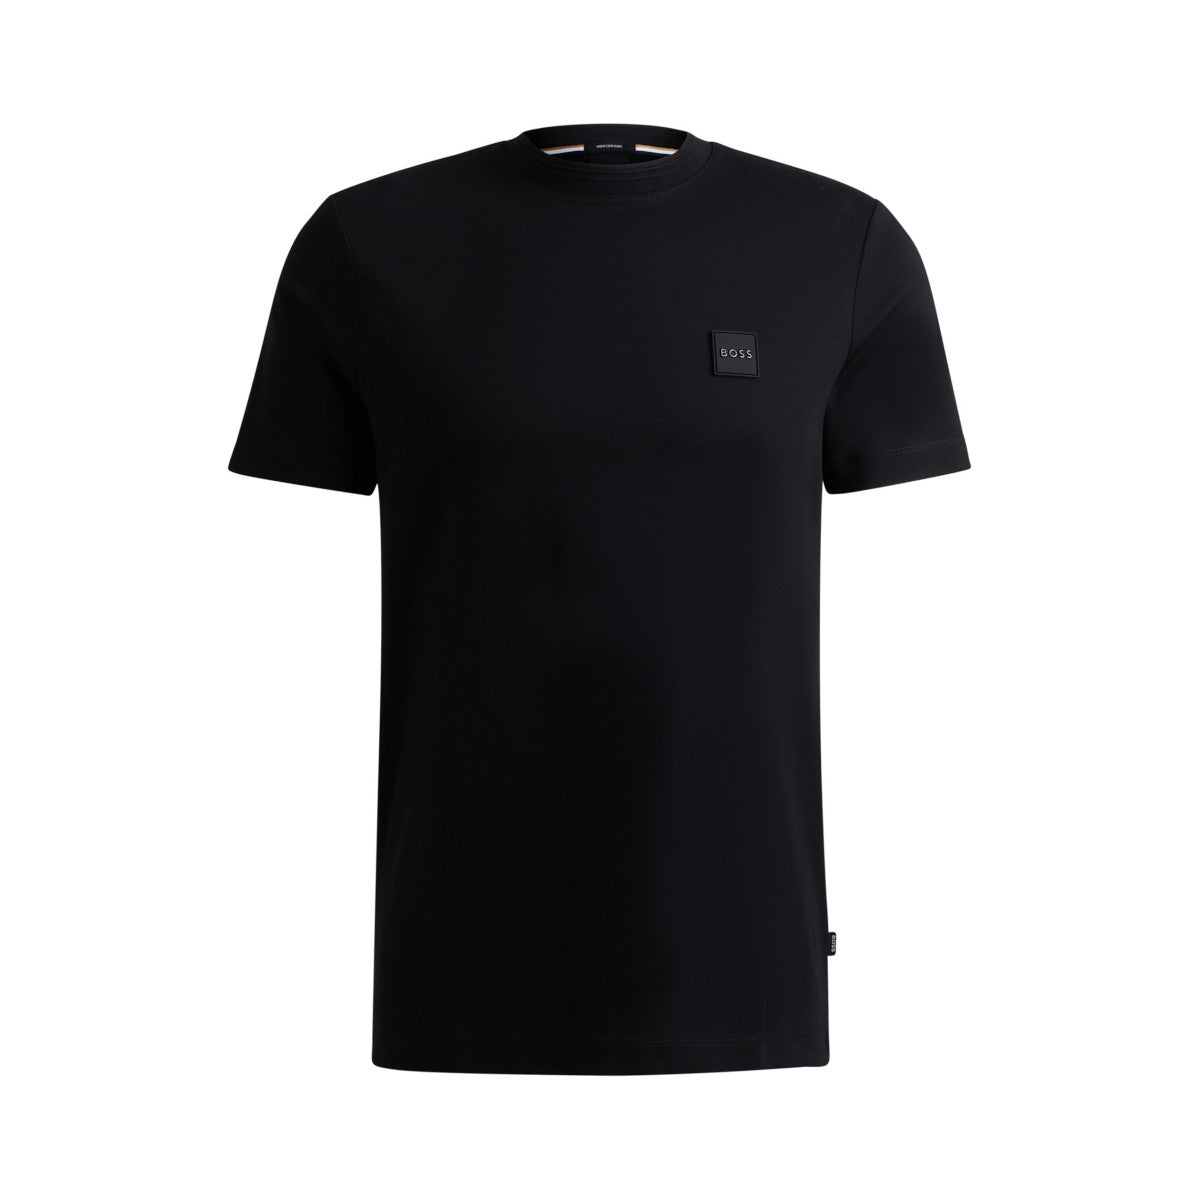 BOSS Black Tiburt 278 T-Shirt 10259994 002 Black